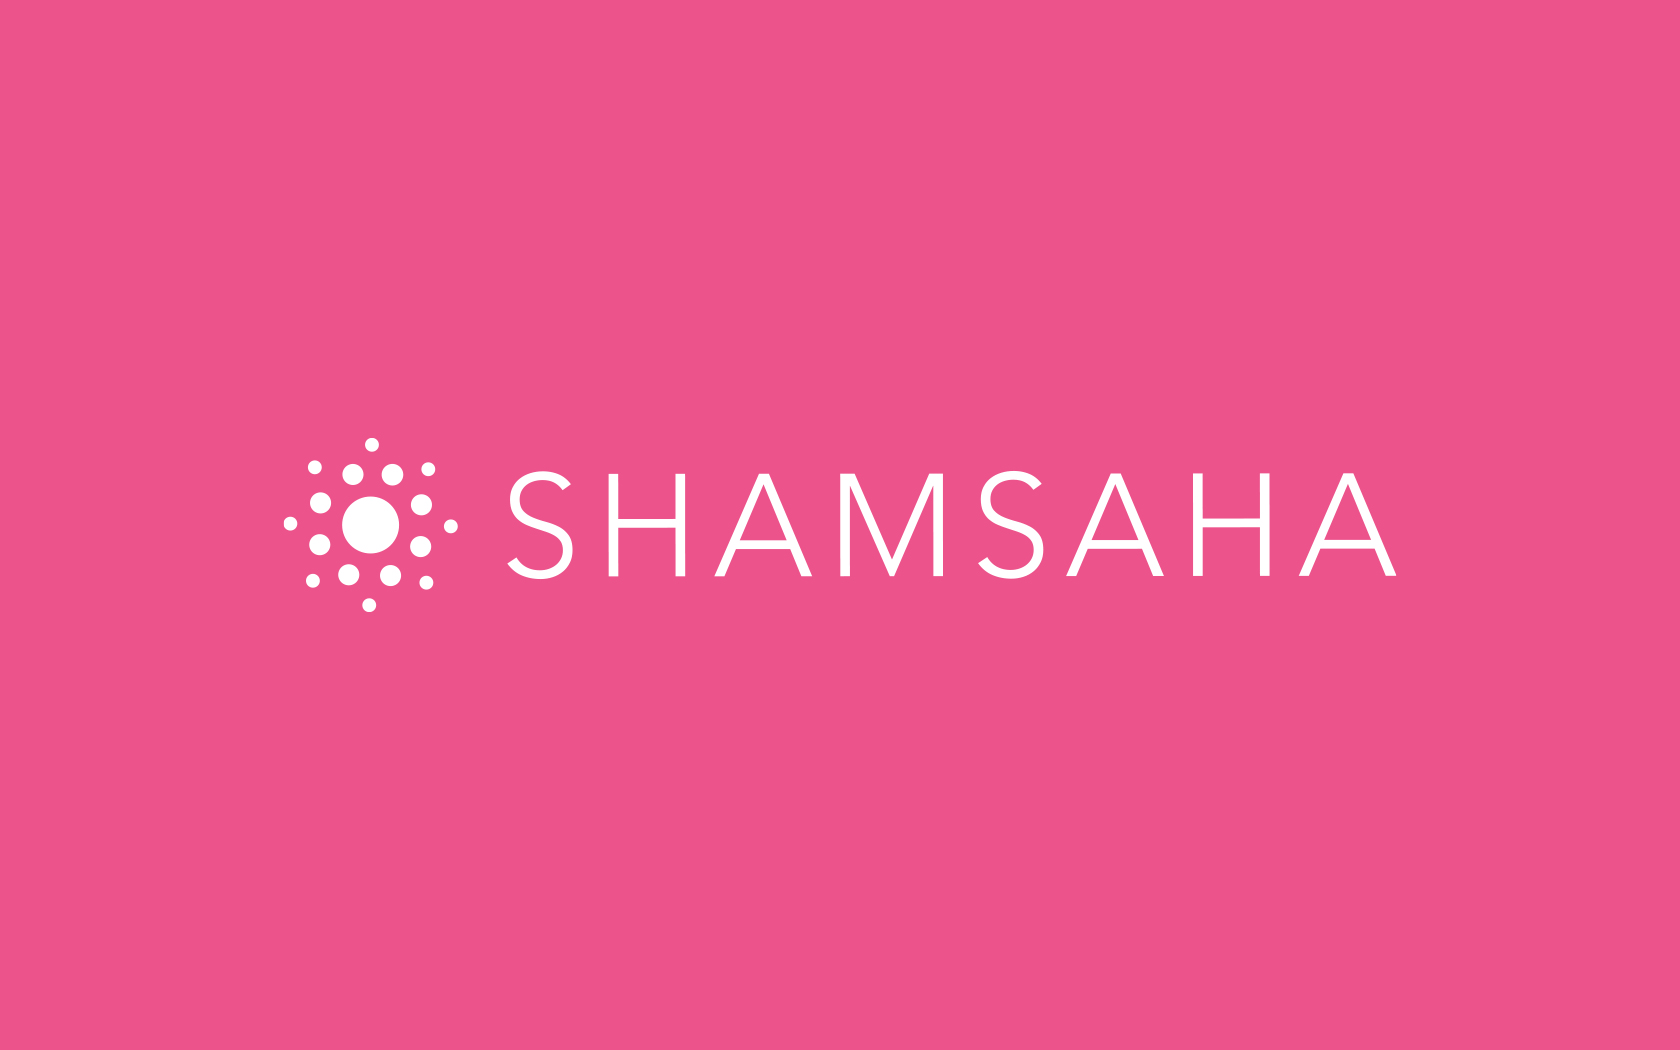 Shamsaha. Brand logo in white